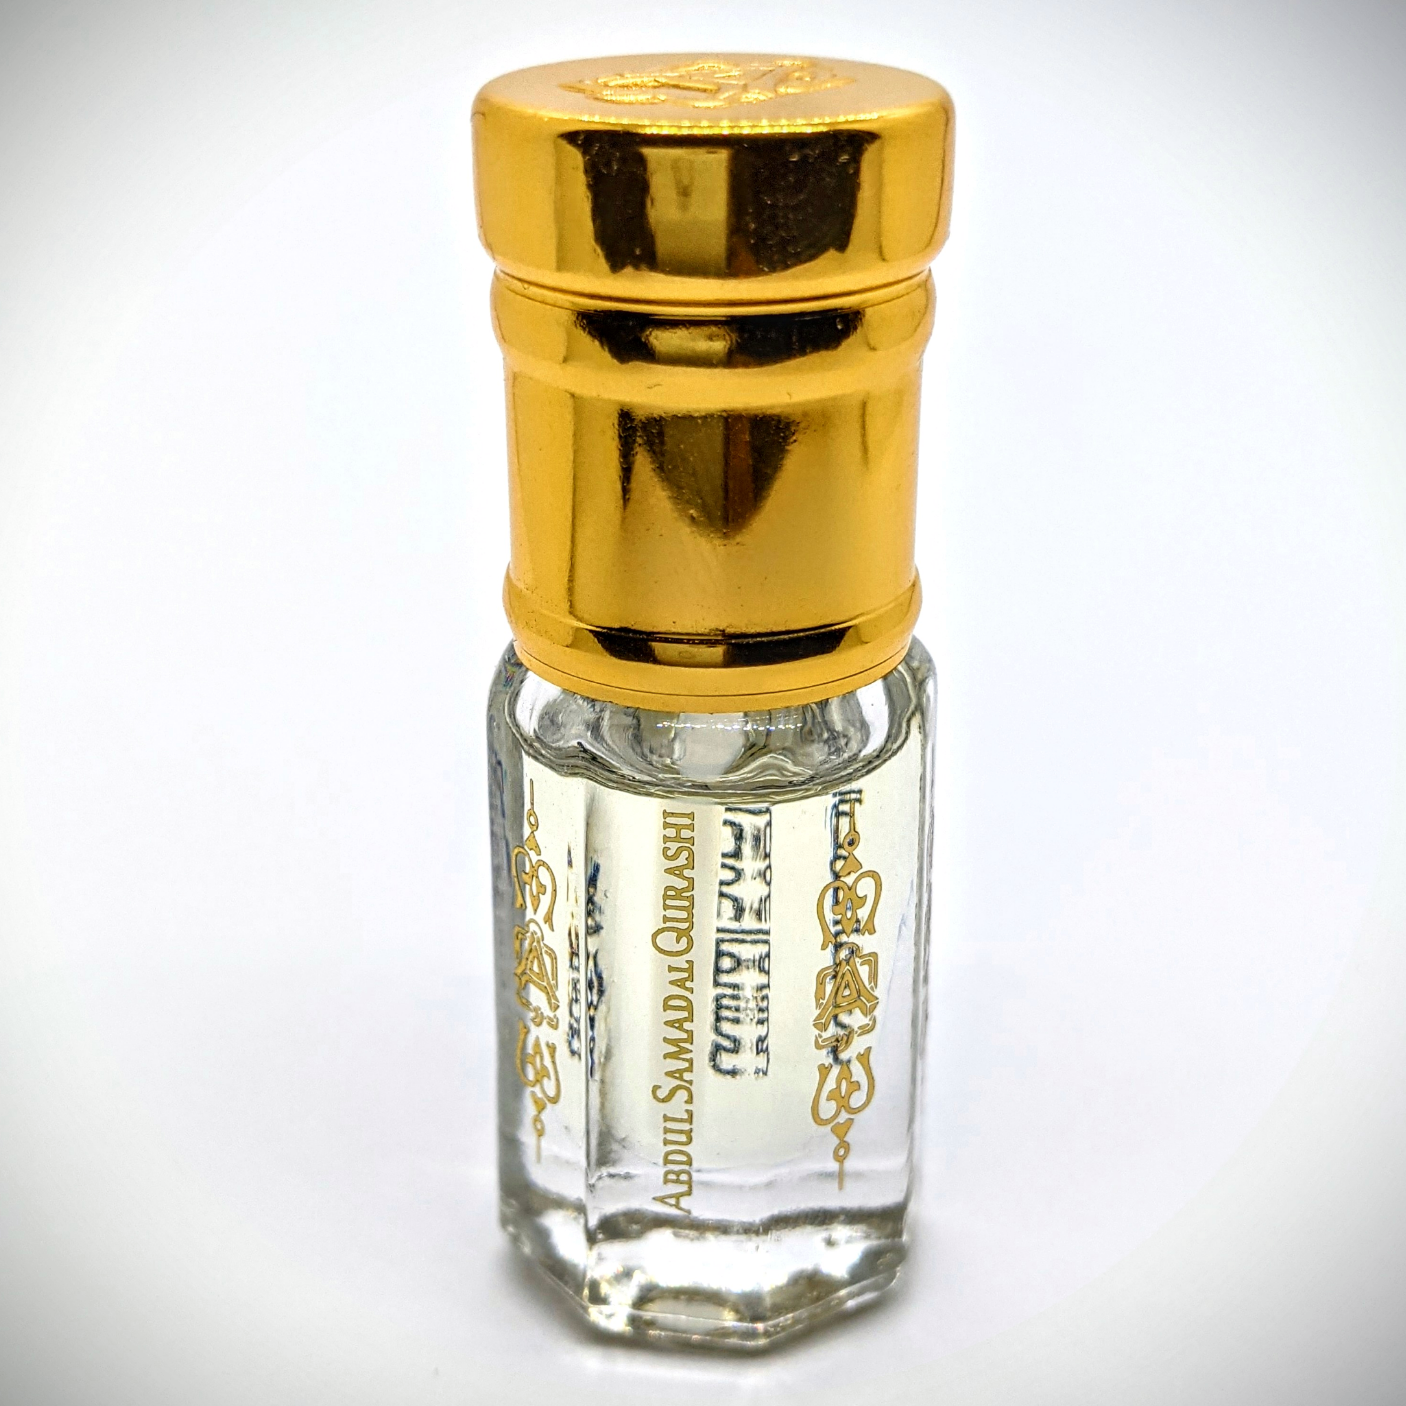 Zahrat Alkhaleej Abdul Samad Perfum oil